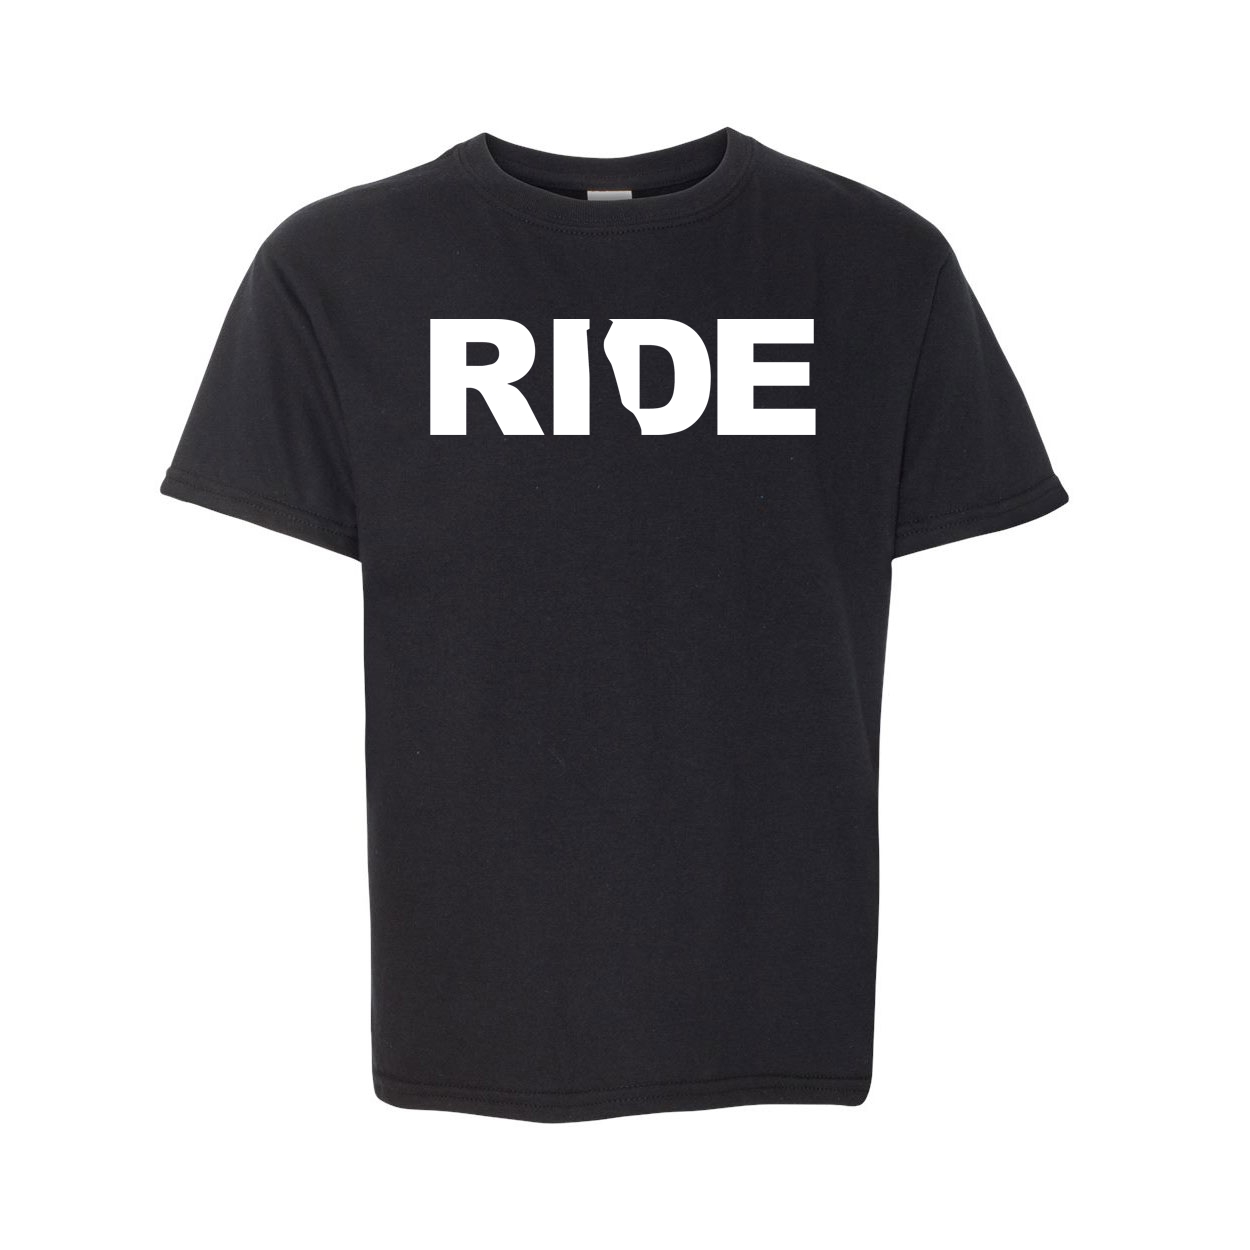 Ride Delaware Classic Youth T-Shirt Black (White Logo)